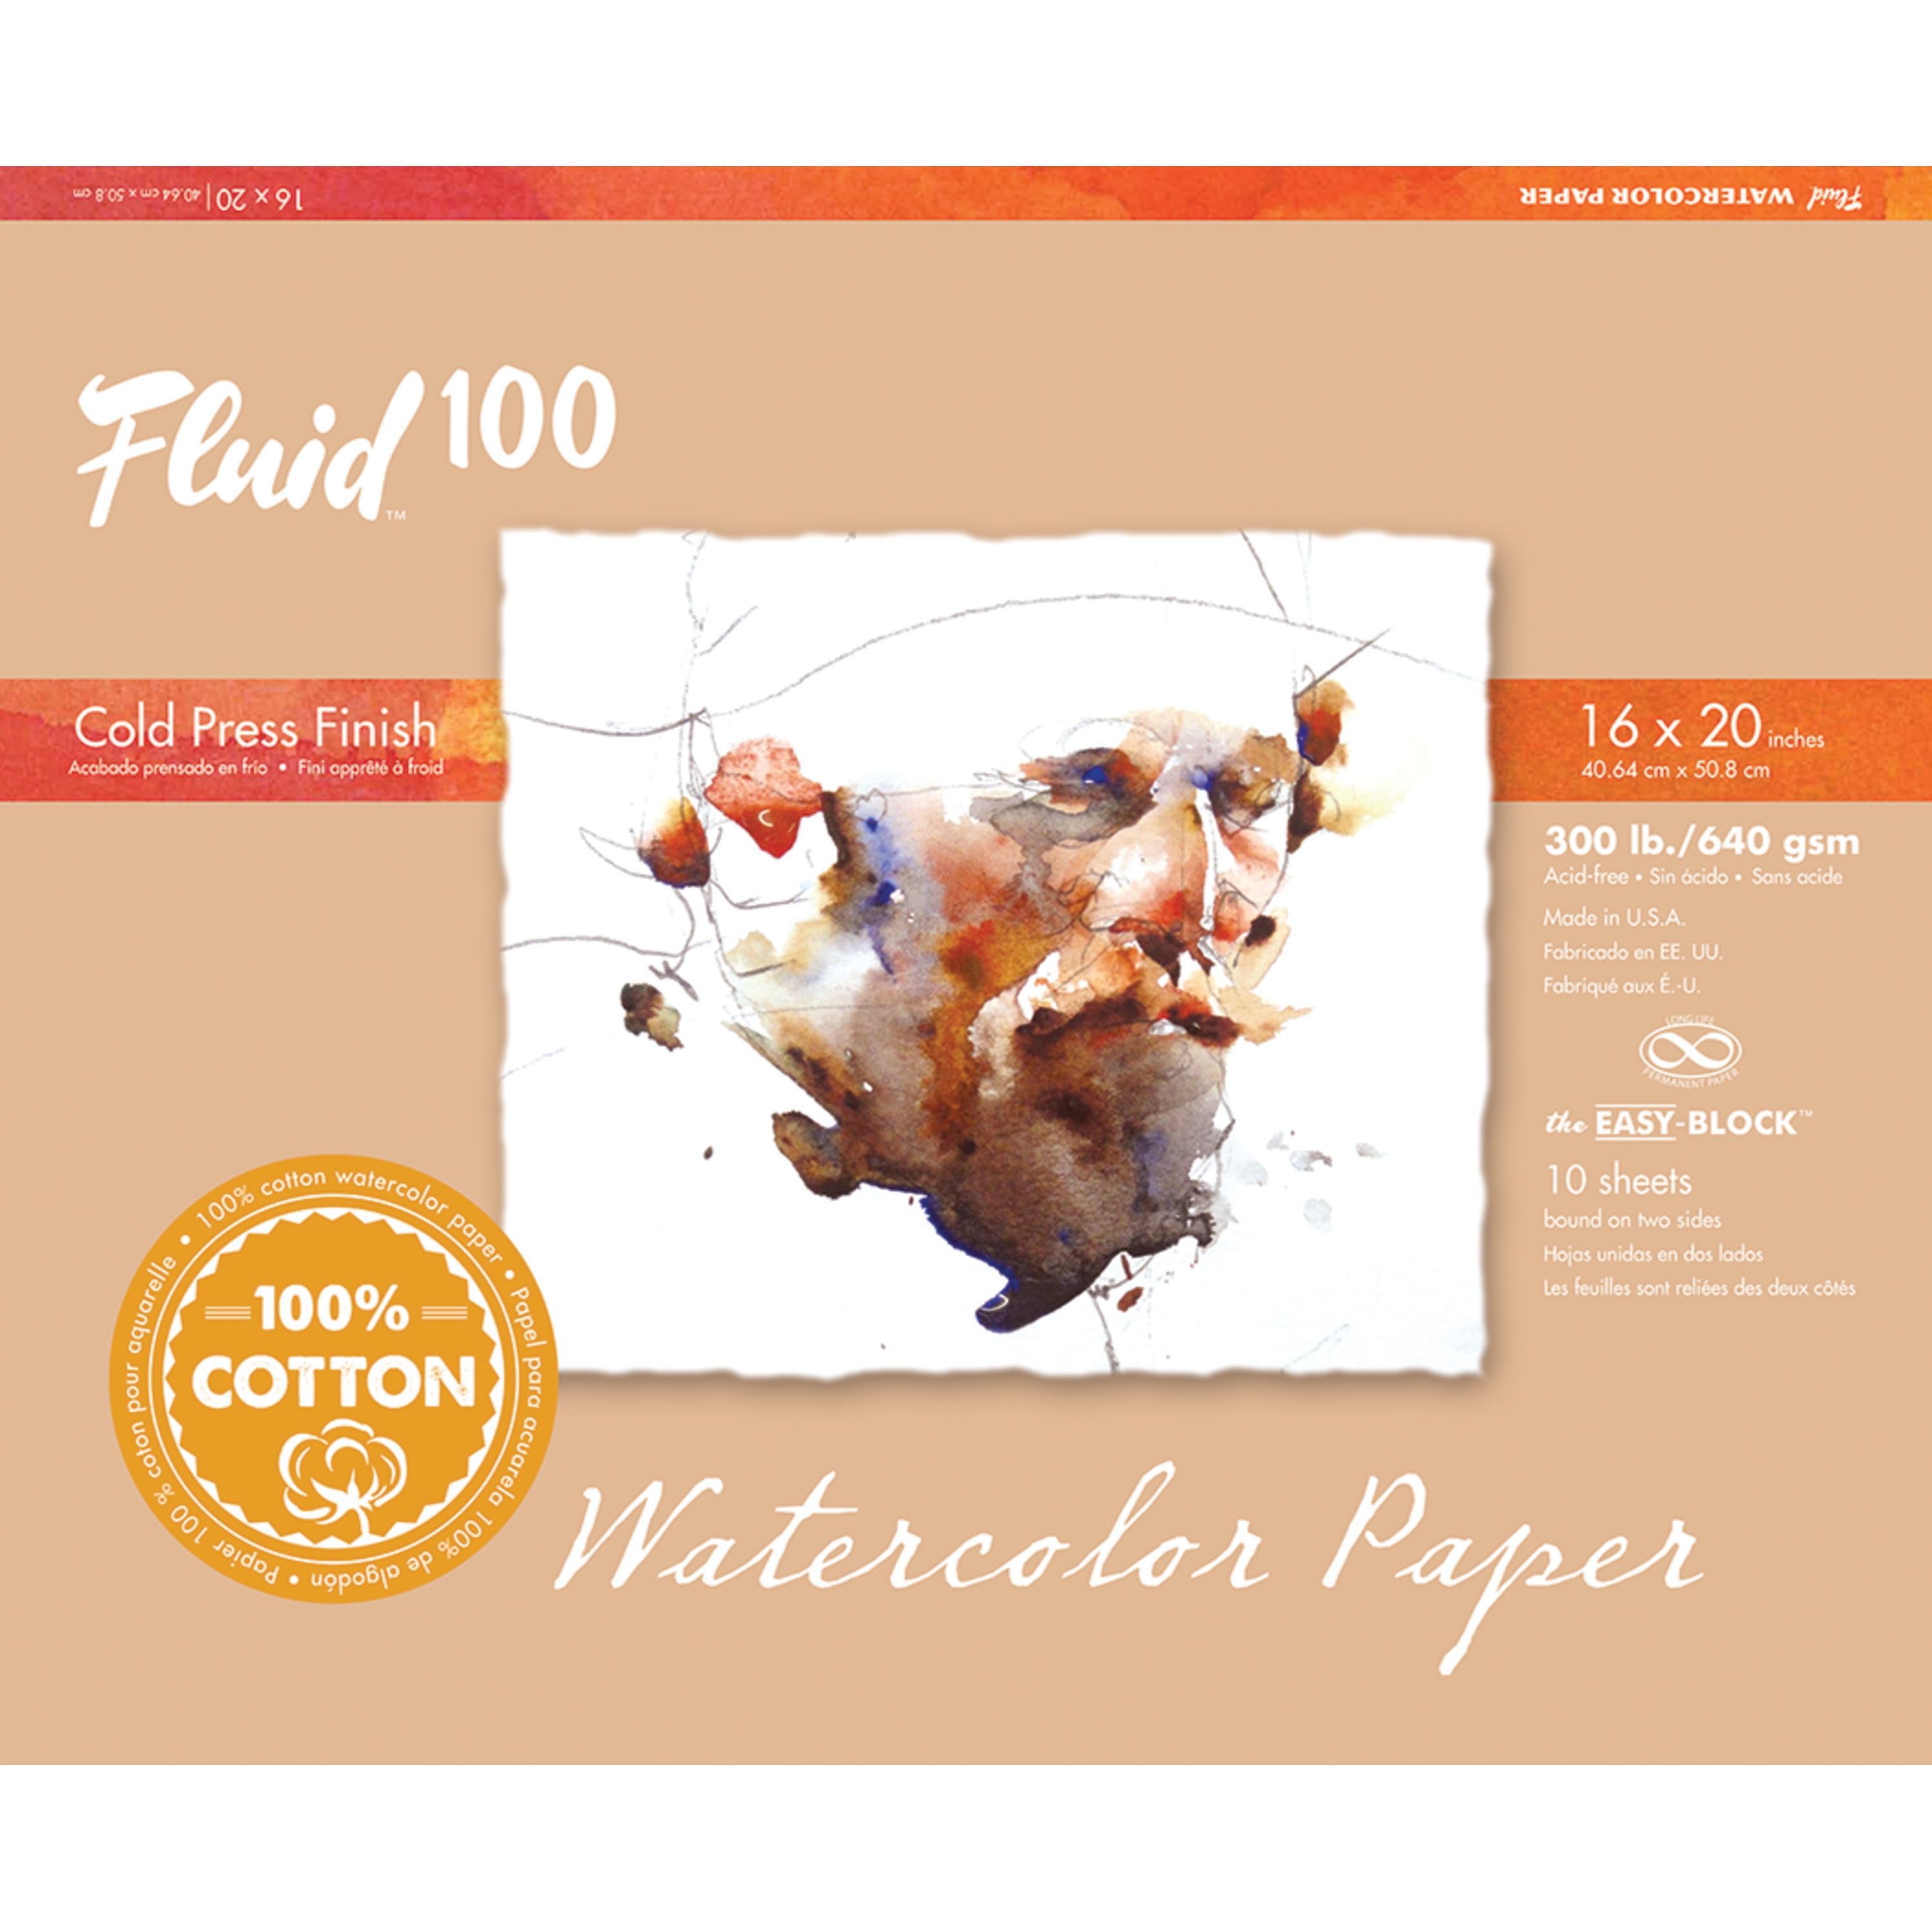 Speedball Fluid 100 Artist Watercolor Paper, 300 lb (640 GSM) 100